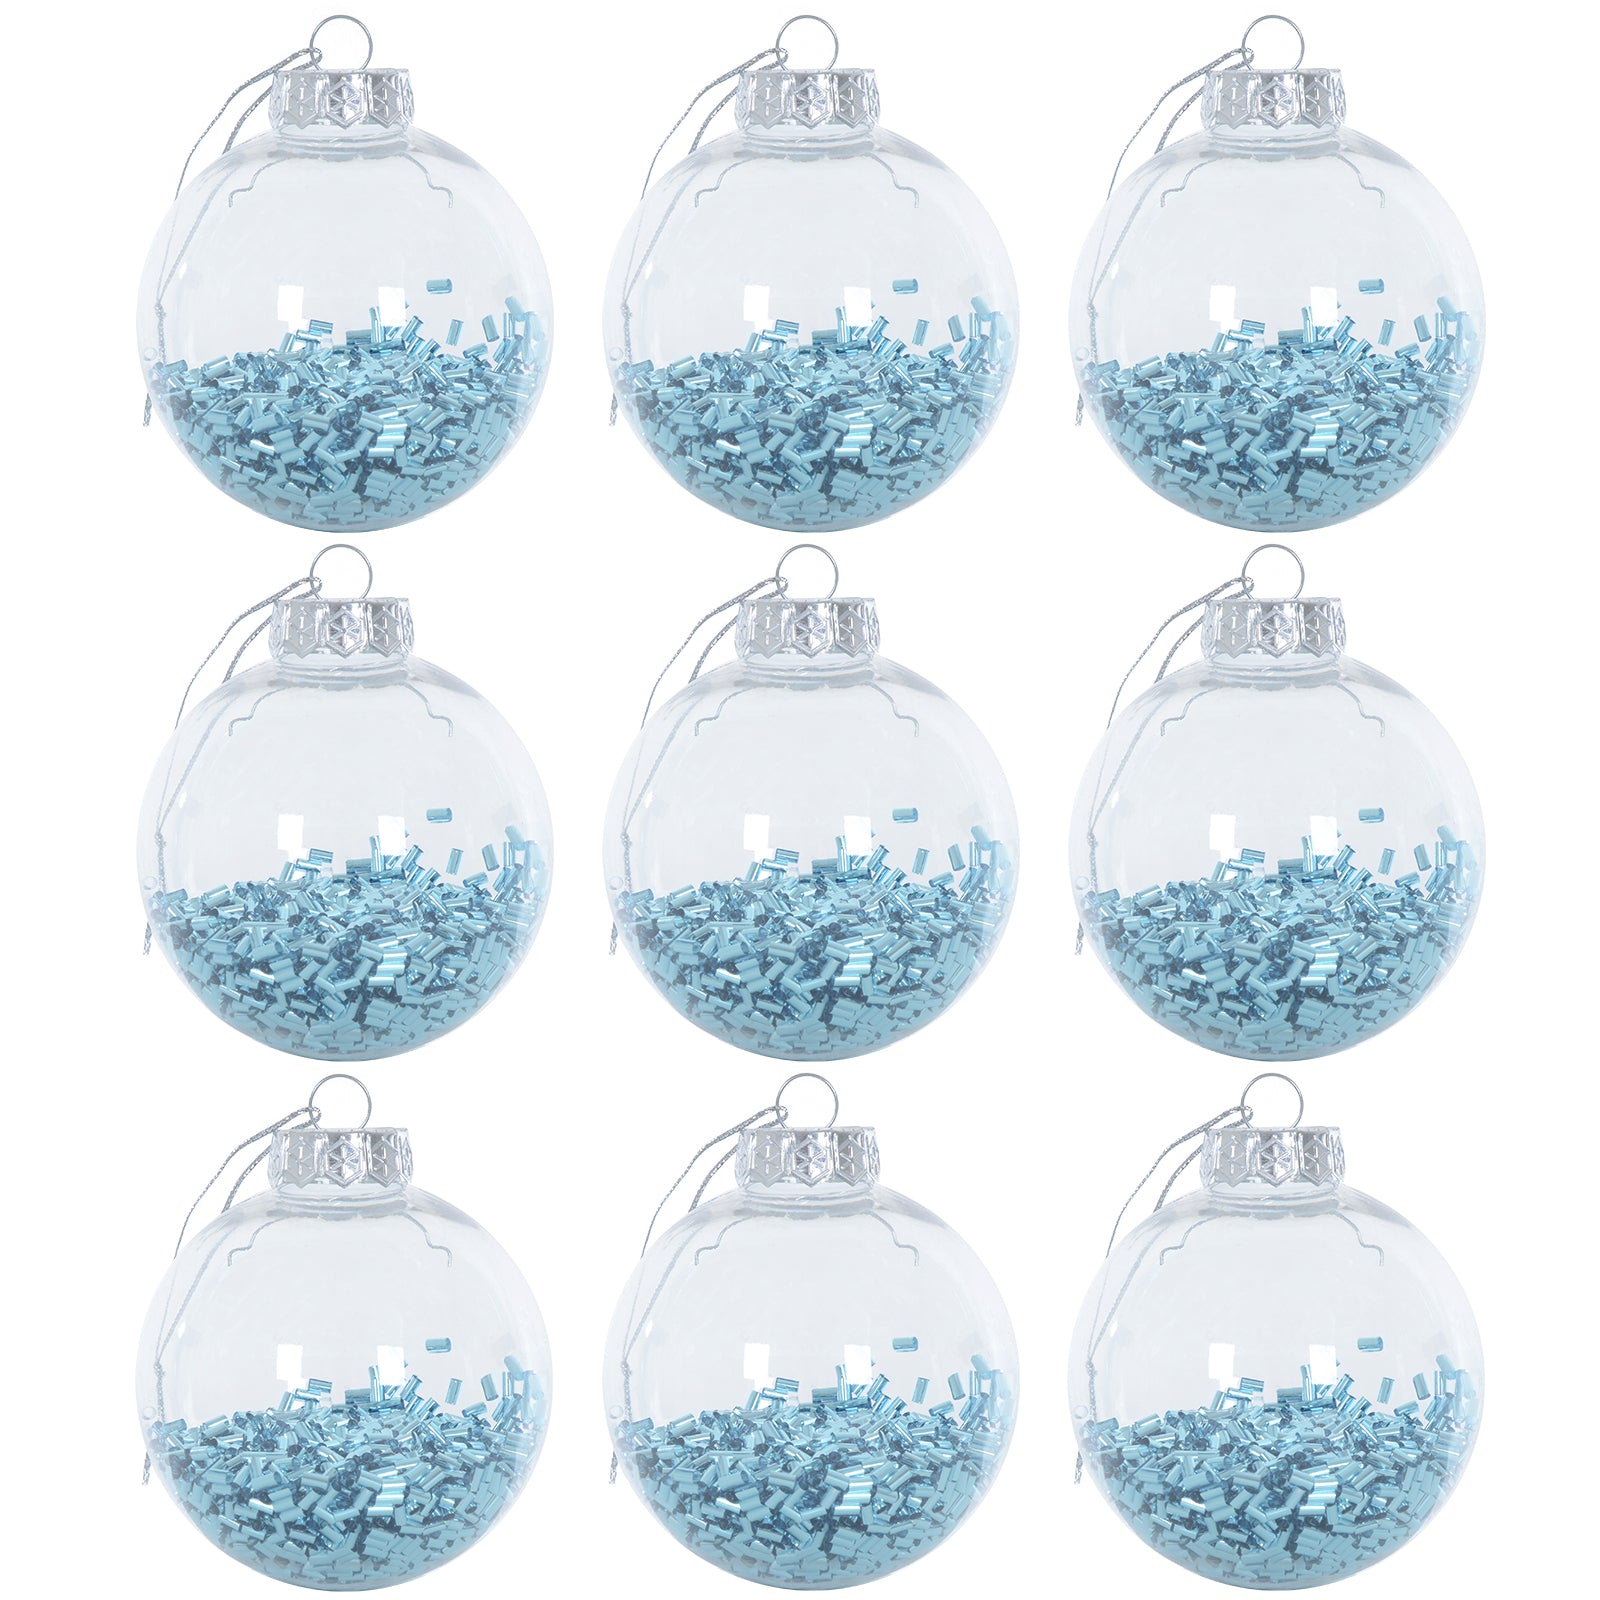 Mr Crimbo 9 x 8cm Foil Filled Shaker Christmas Tree Baubles - MrCrimbo.co.uk -XS6466 - Vivid Blue -Baubles